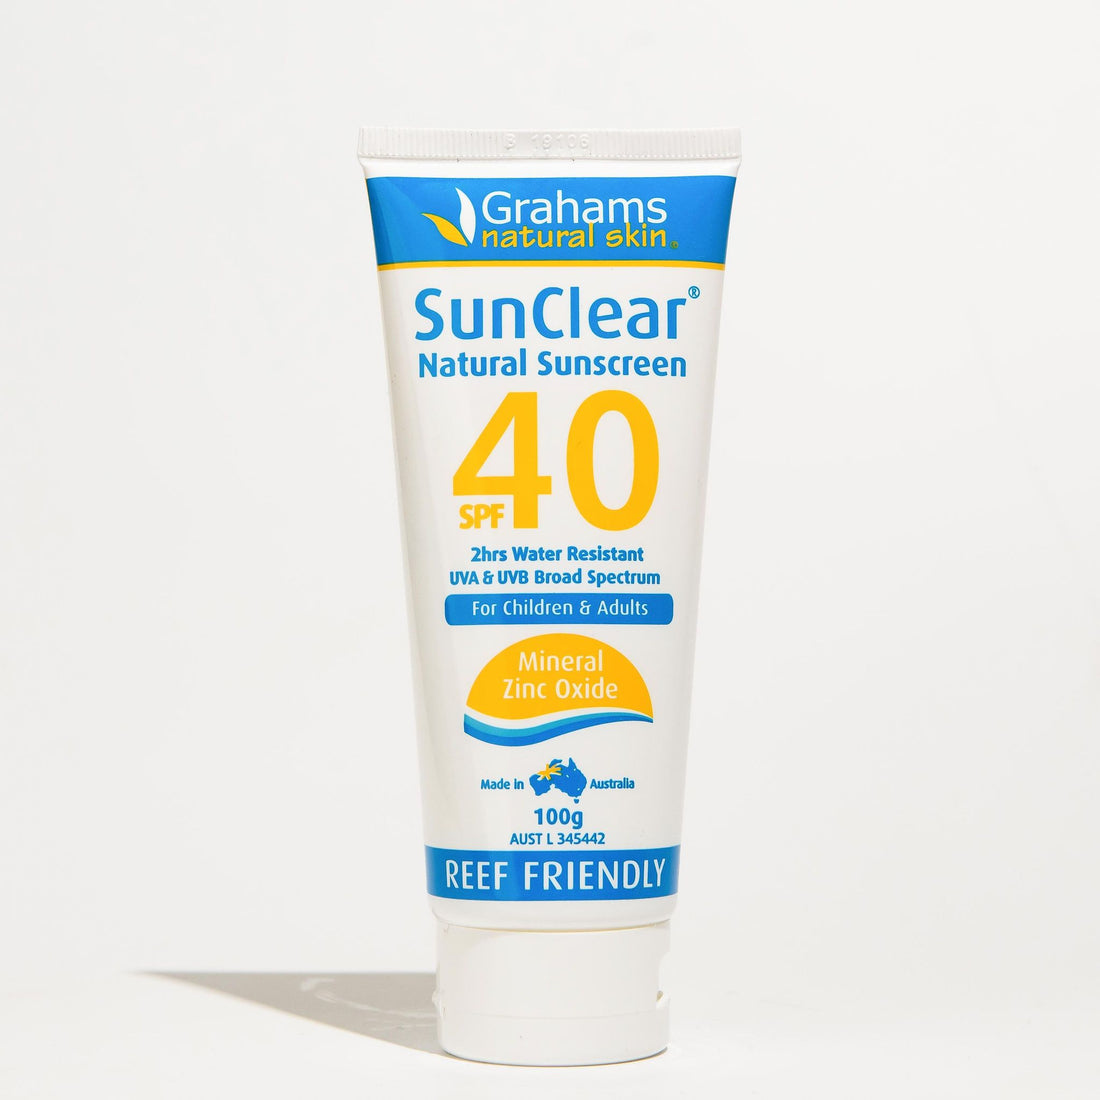 SunClear SPF 40 Reef Friendly Sunscreen